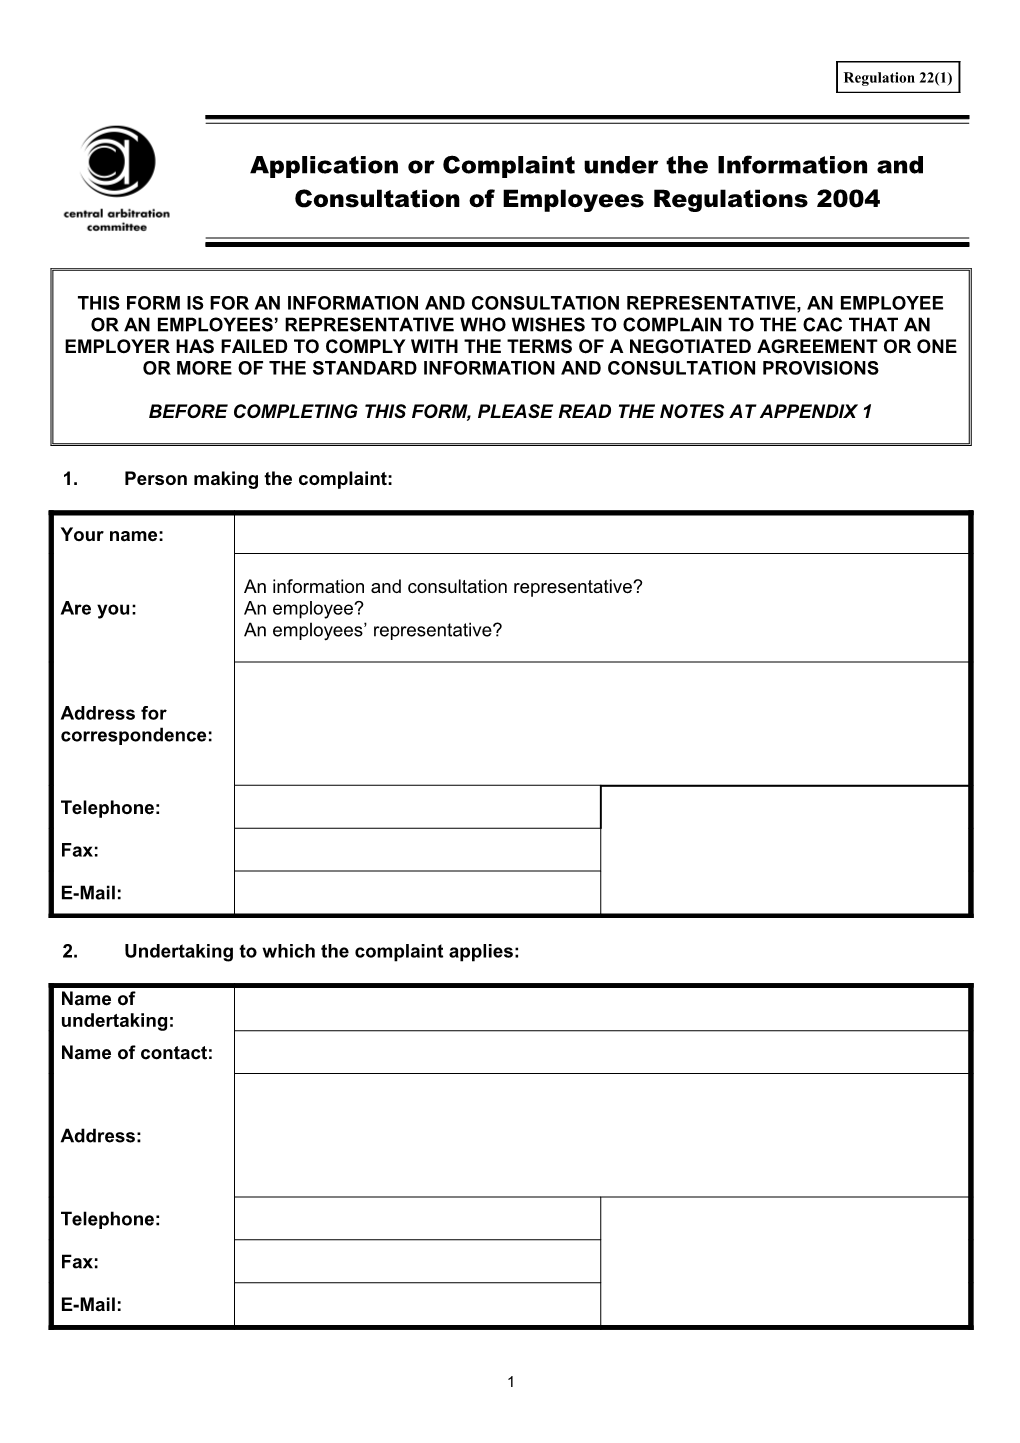 I & C Application Form (Reg 22(1))